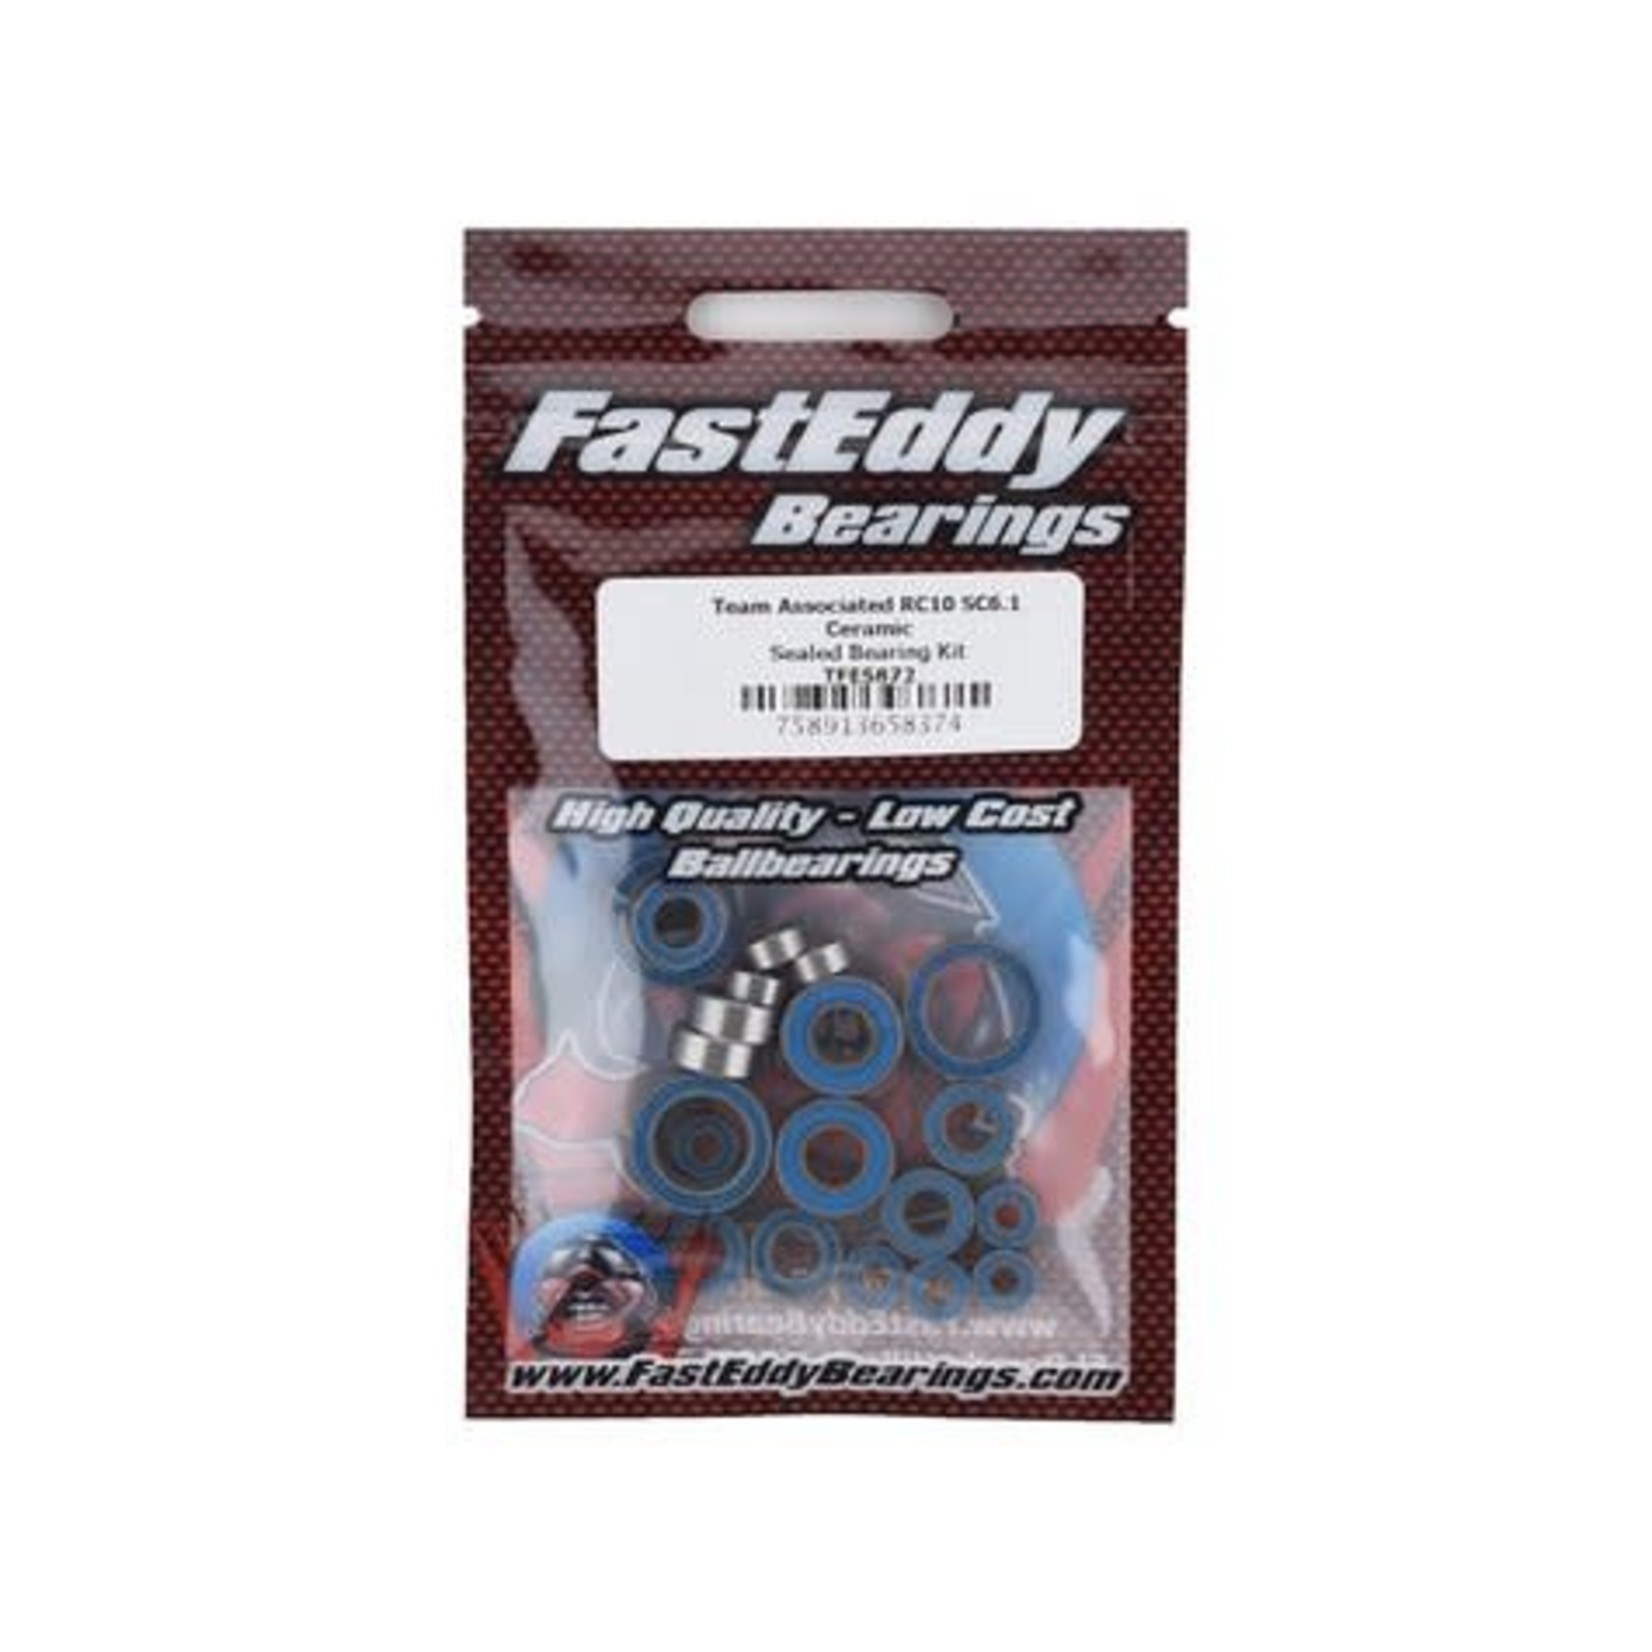 FastEddy FastEddy Team Associated RC10 SC6.1 Ceramic Sealed Bearing Kit #TFE5872